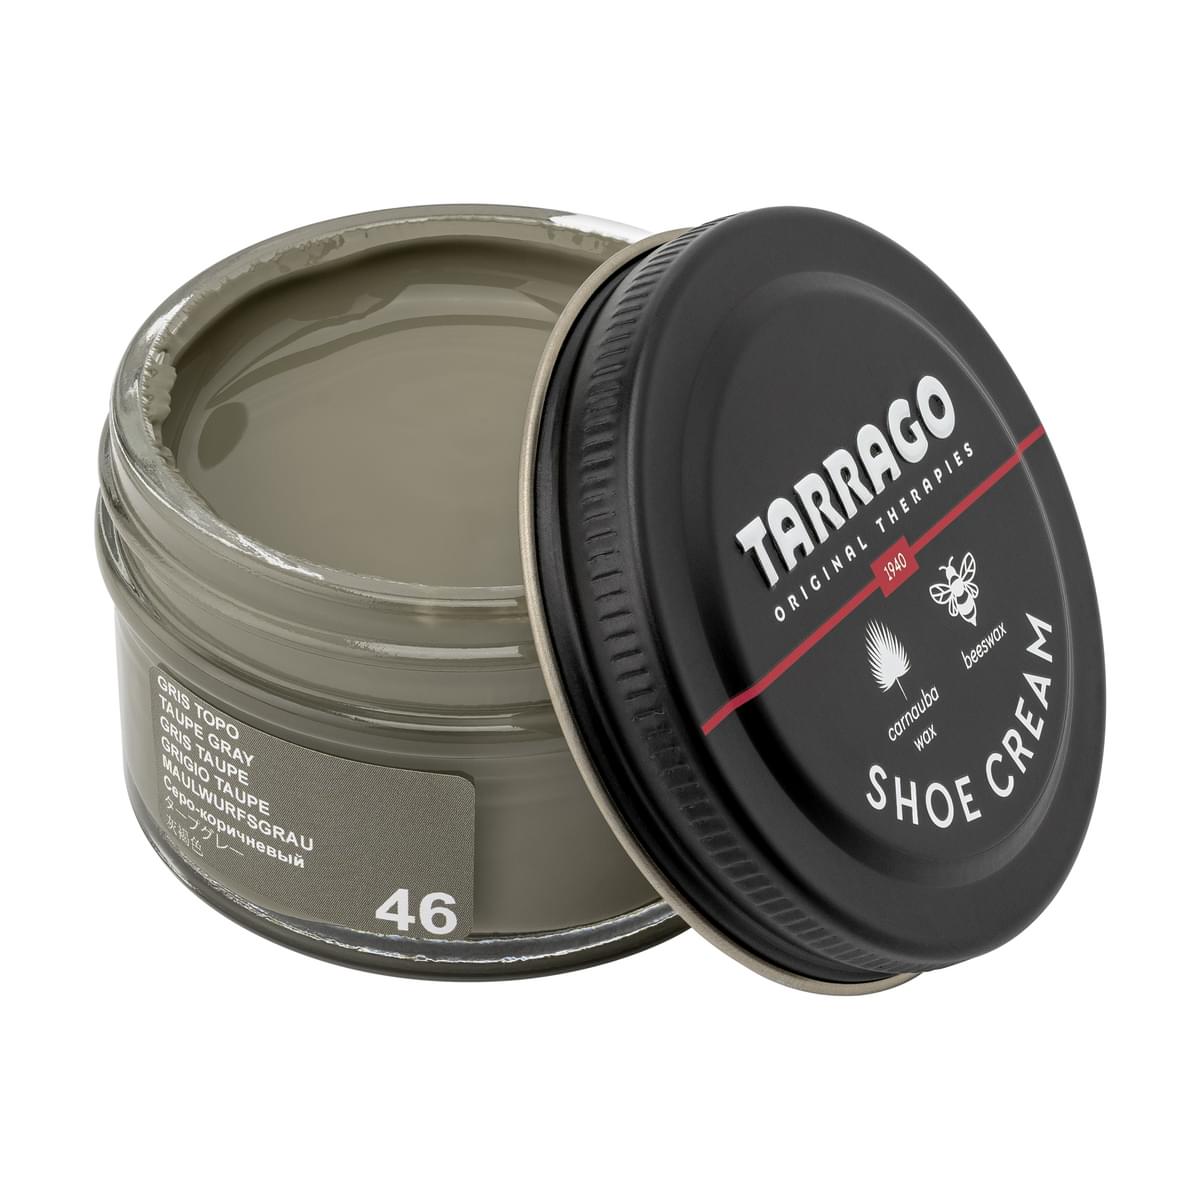 Tarrago Shoe Cream  - Taupe Gray - 46